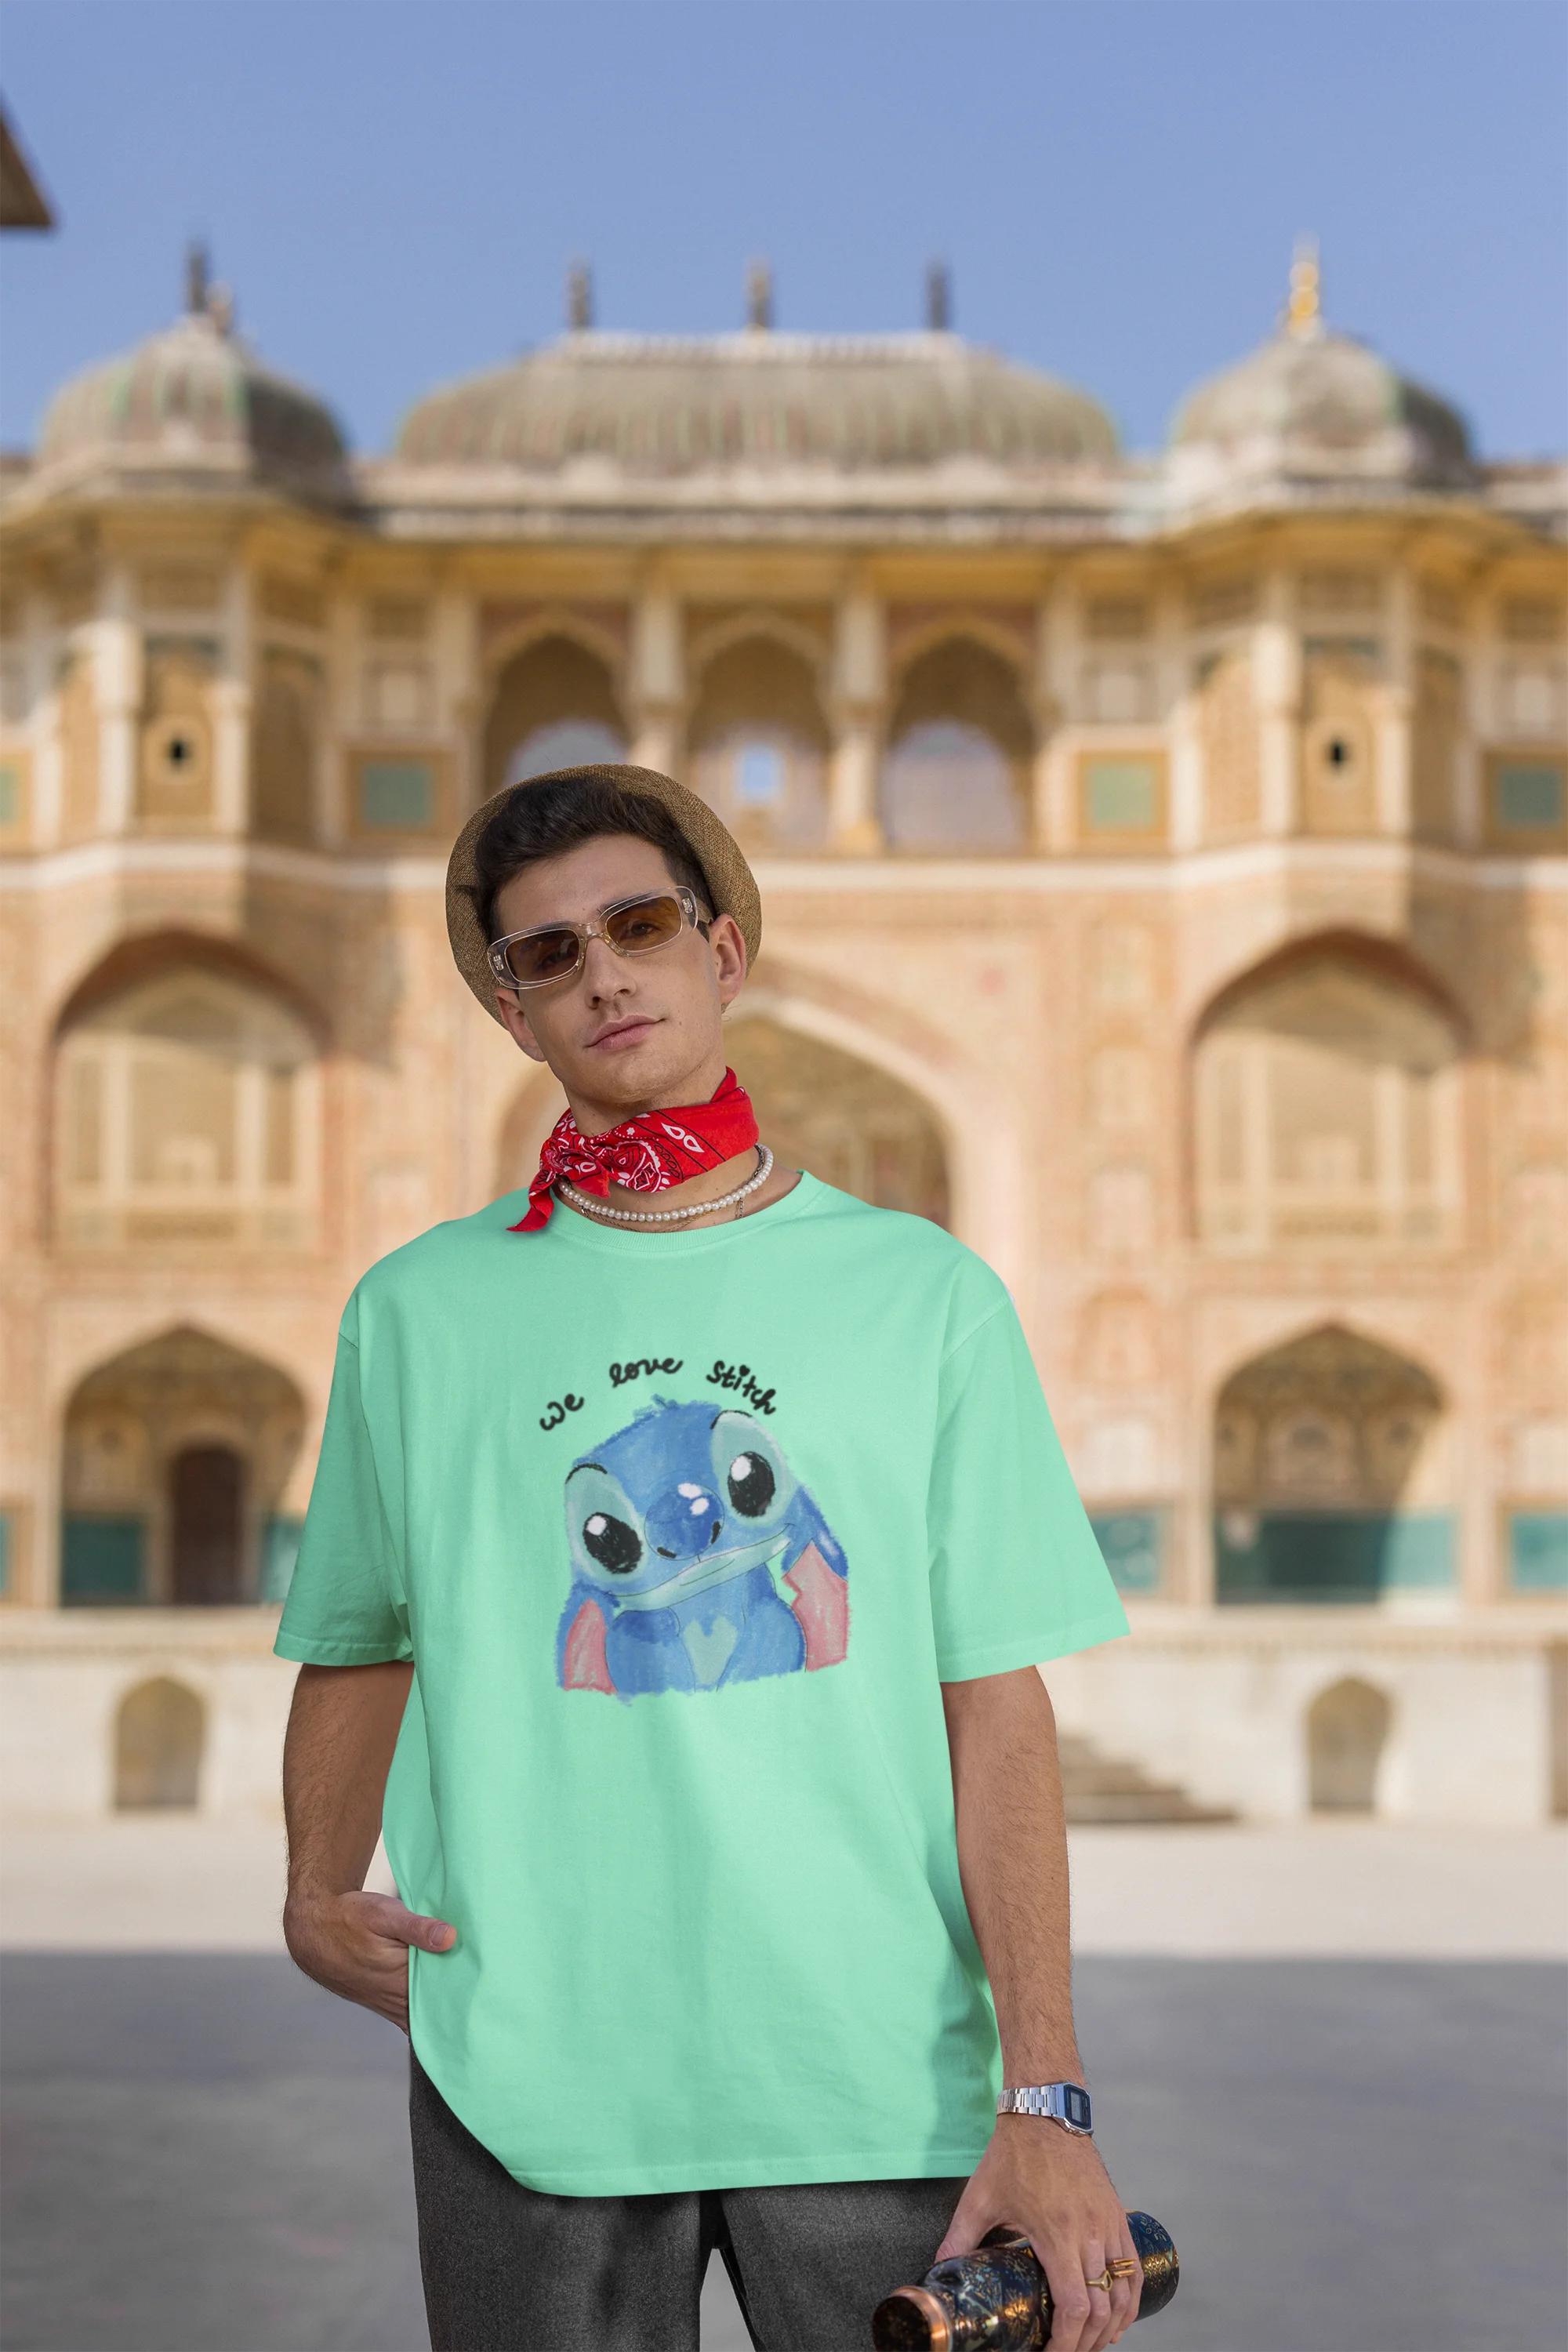 We love stitch | Disney | Premium Oversized Half Sleeve Unisex T-Shirt